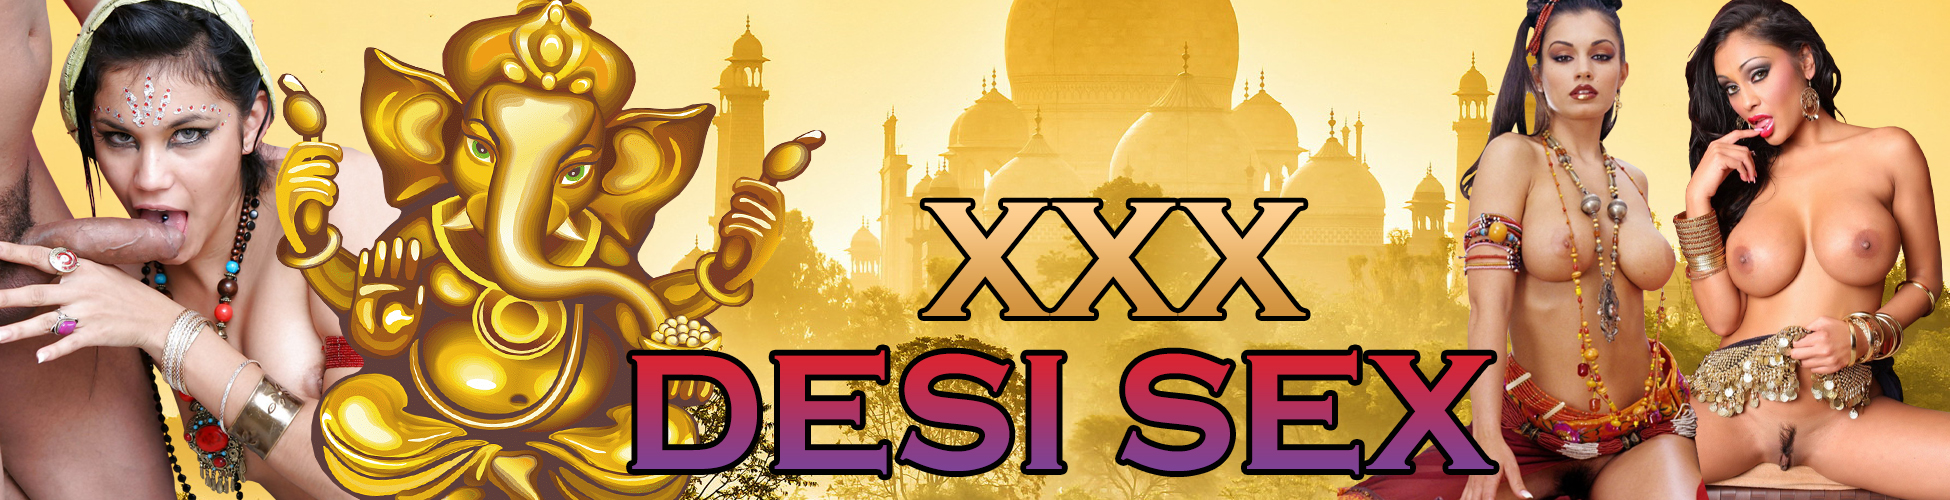 Dasi Six Xxxx - XXX Desi Sex â¤ï¸ï¸ Hot HD Hindi Porn